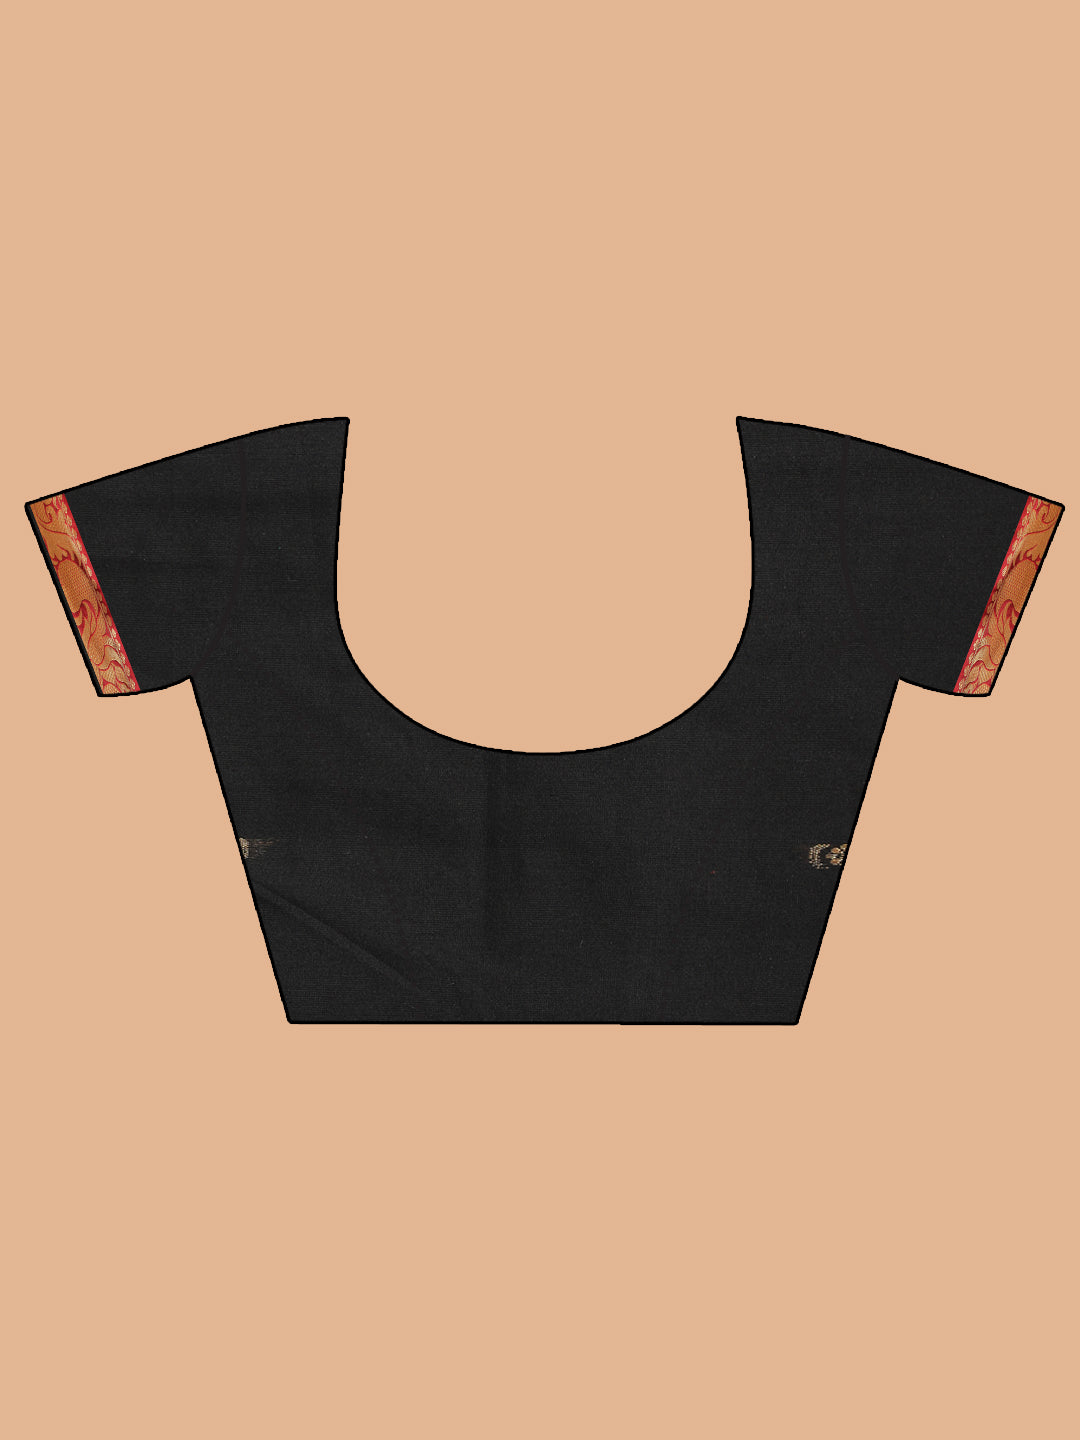 Indethnic Black Pure Cotton Woven Design Saree - Blouse Piece View